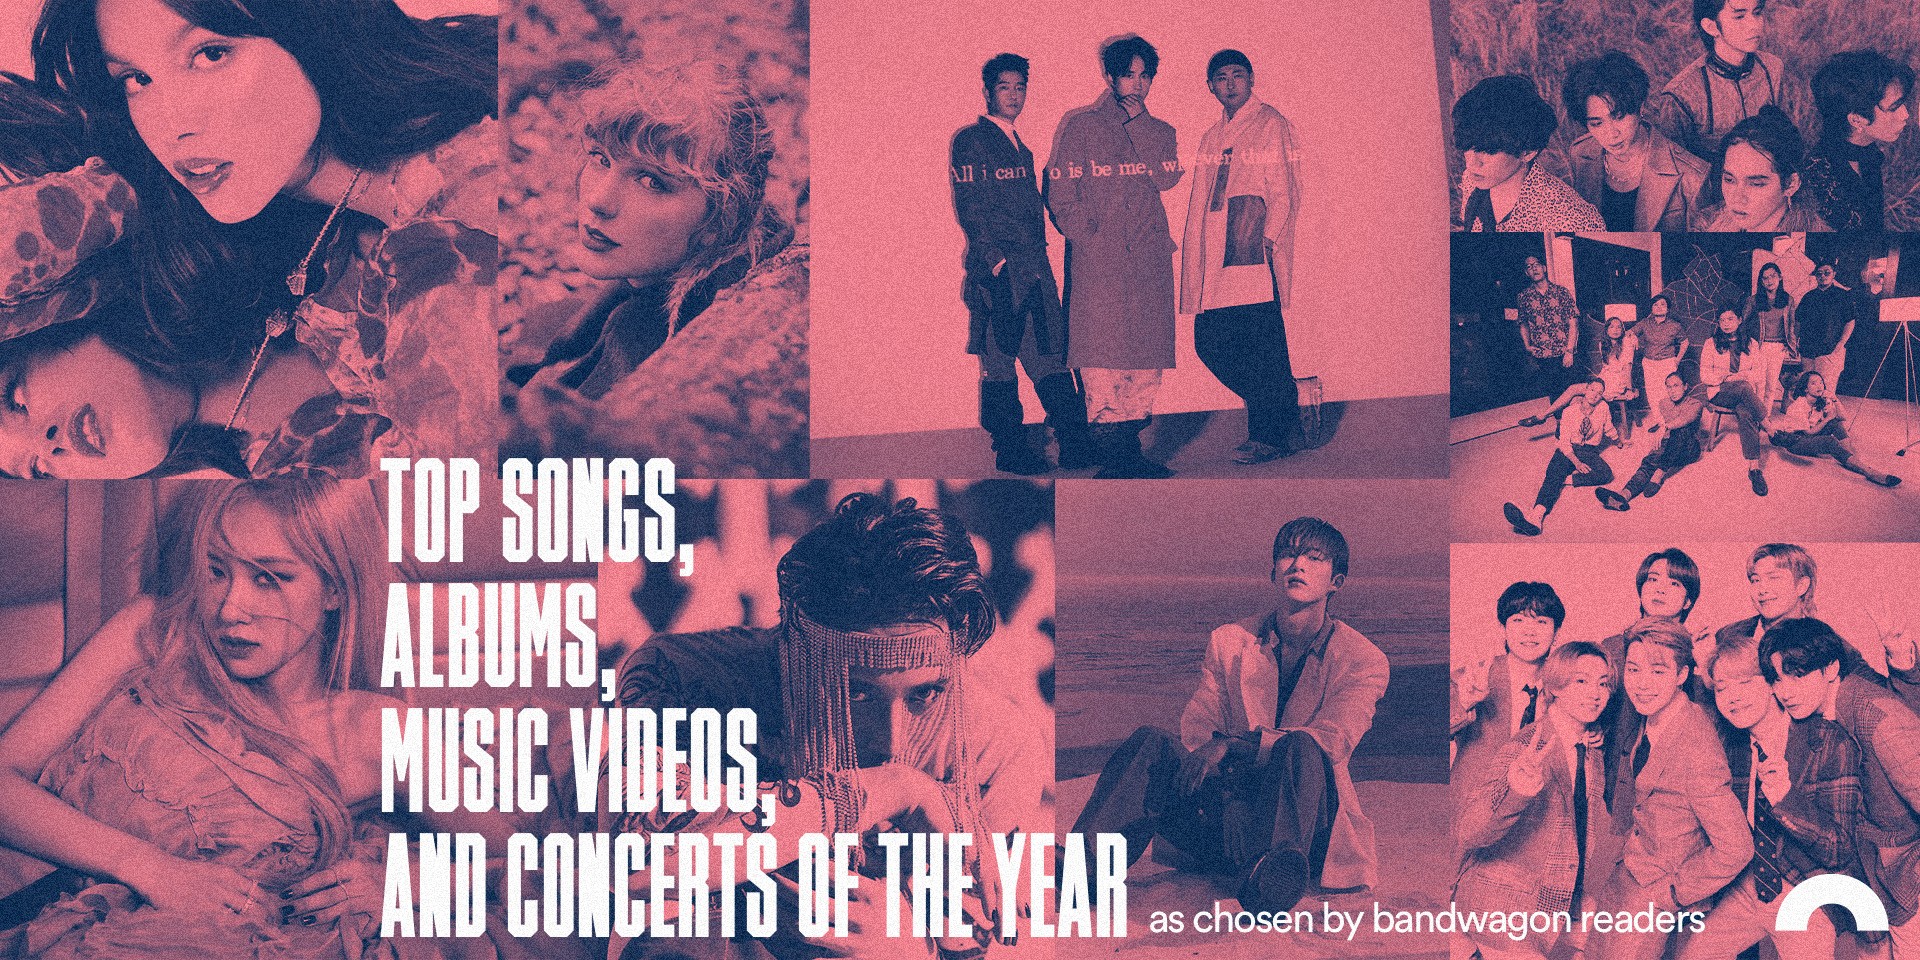 Top songs, albums, music videos, and concerts of 2021 according to Bandwagon readers – SB19, Olivia Rodrigo, BTS, Epik High, ROSÉ, Ben&Ben, B.I., and more